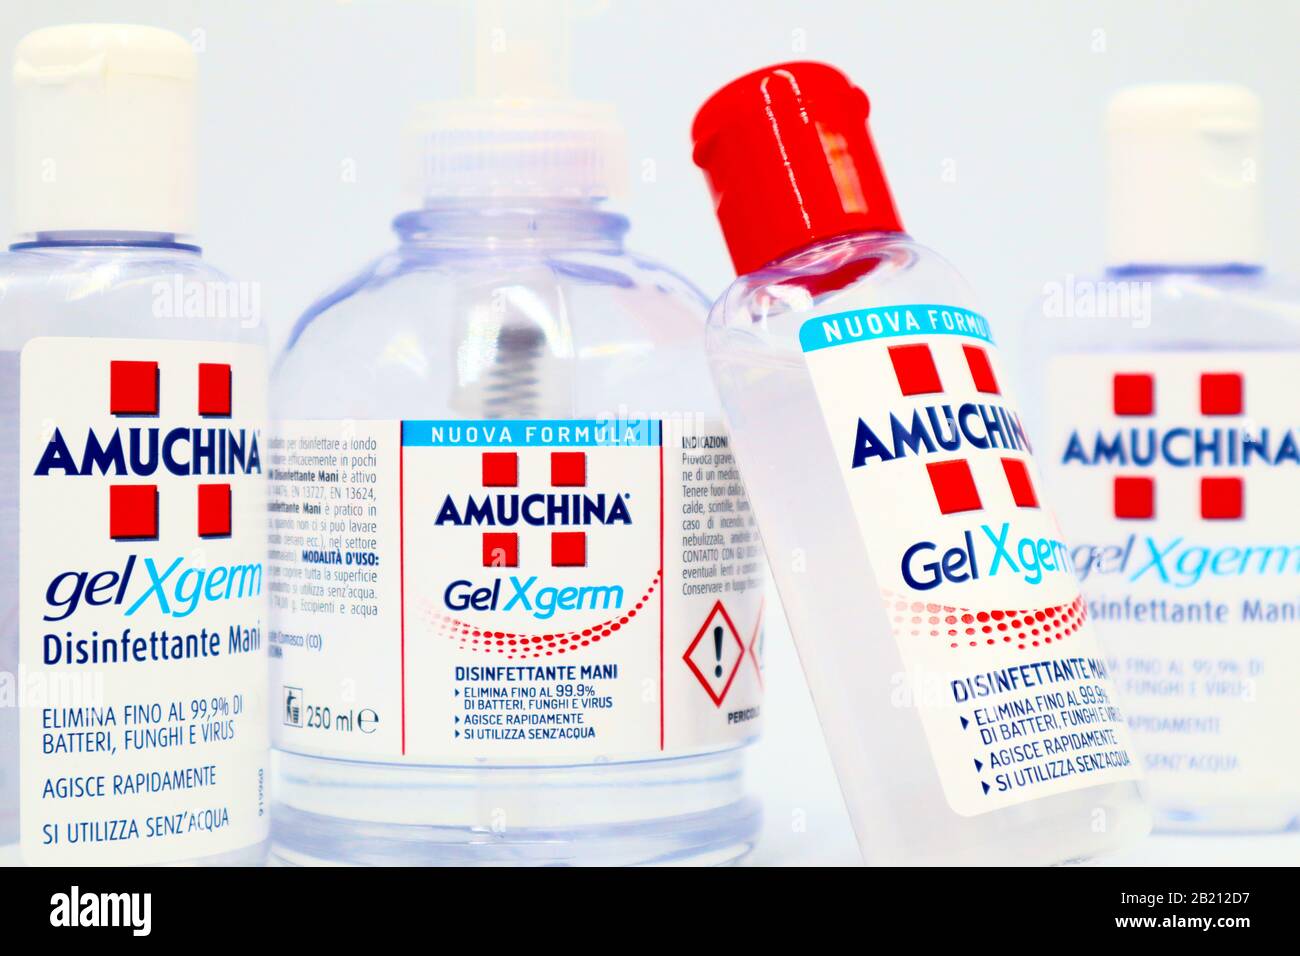 AMUCHINA Gel XGERM Hand Sanitizer to decrease infectious agent Virus, Fungi  and Bacteria. AMUCHINA is an Italian brand of ACRAF ANGELINI Pharma Stock  Photo - Alamy